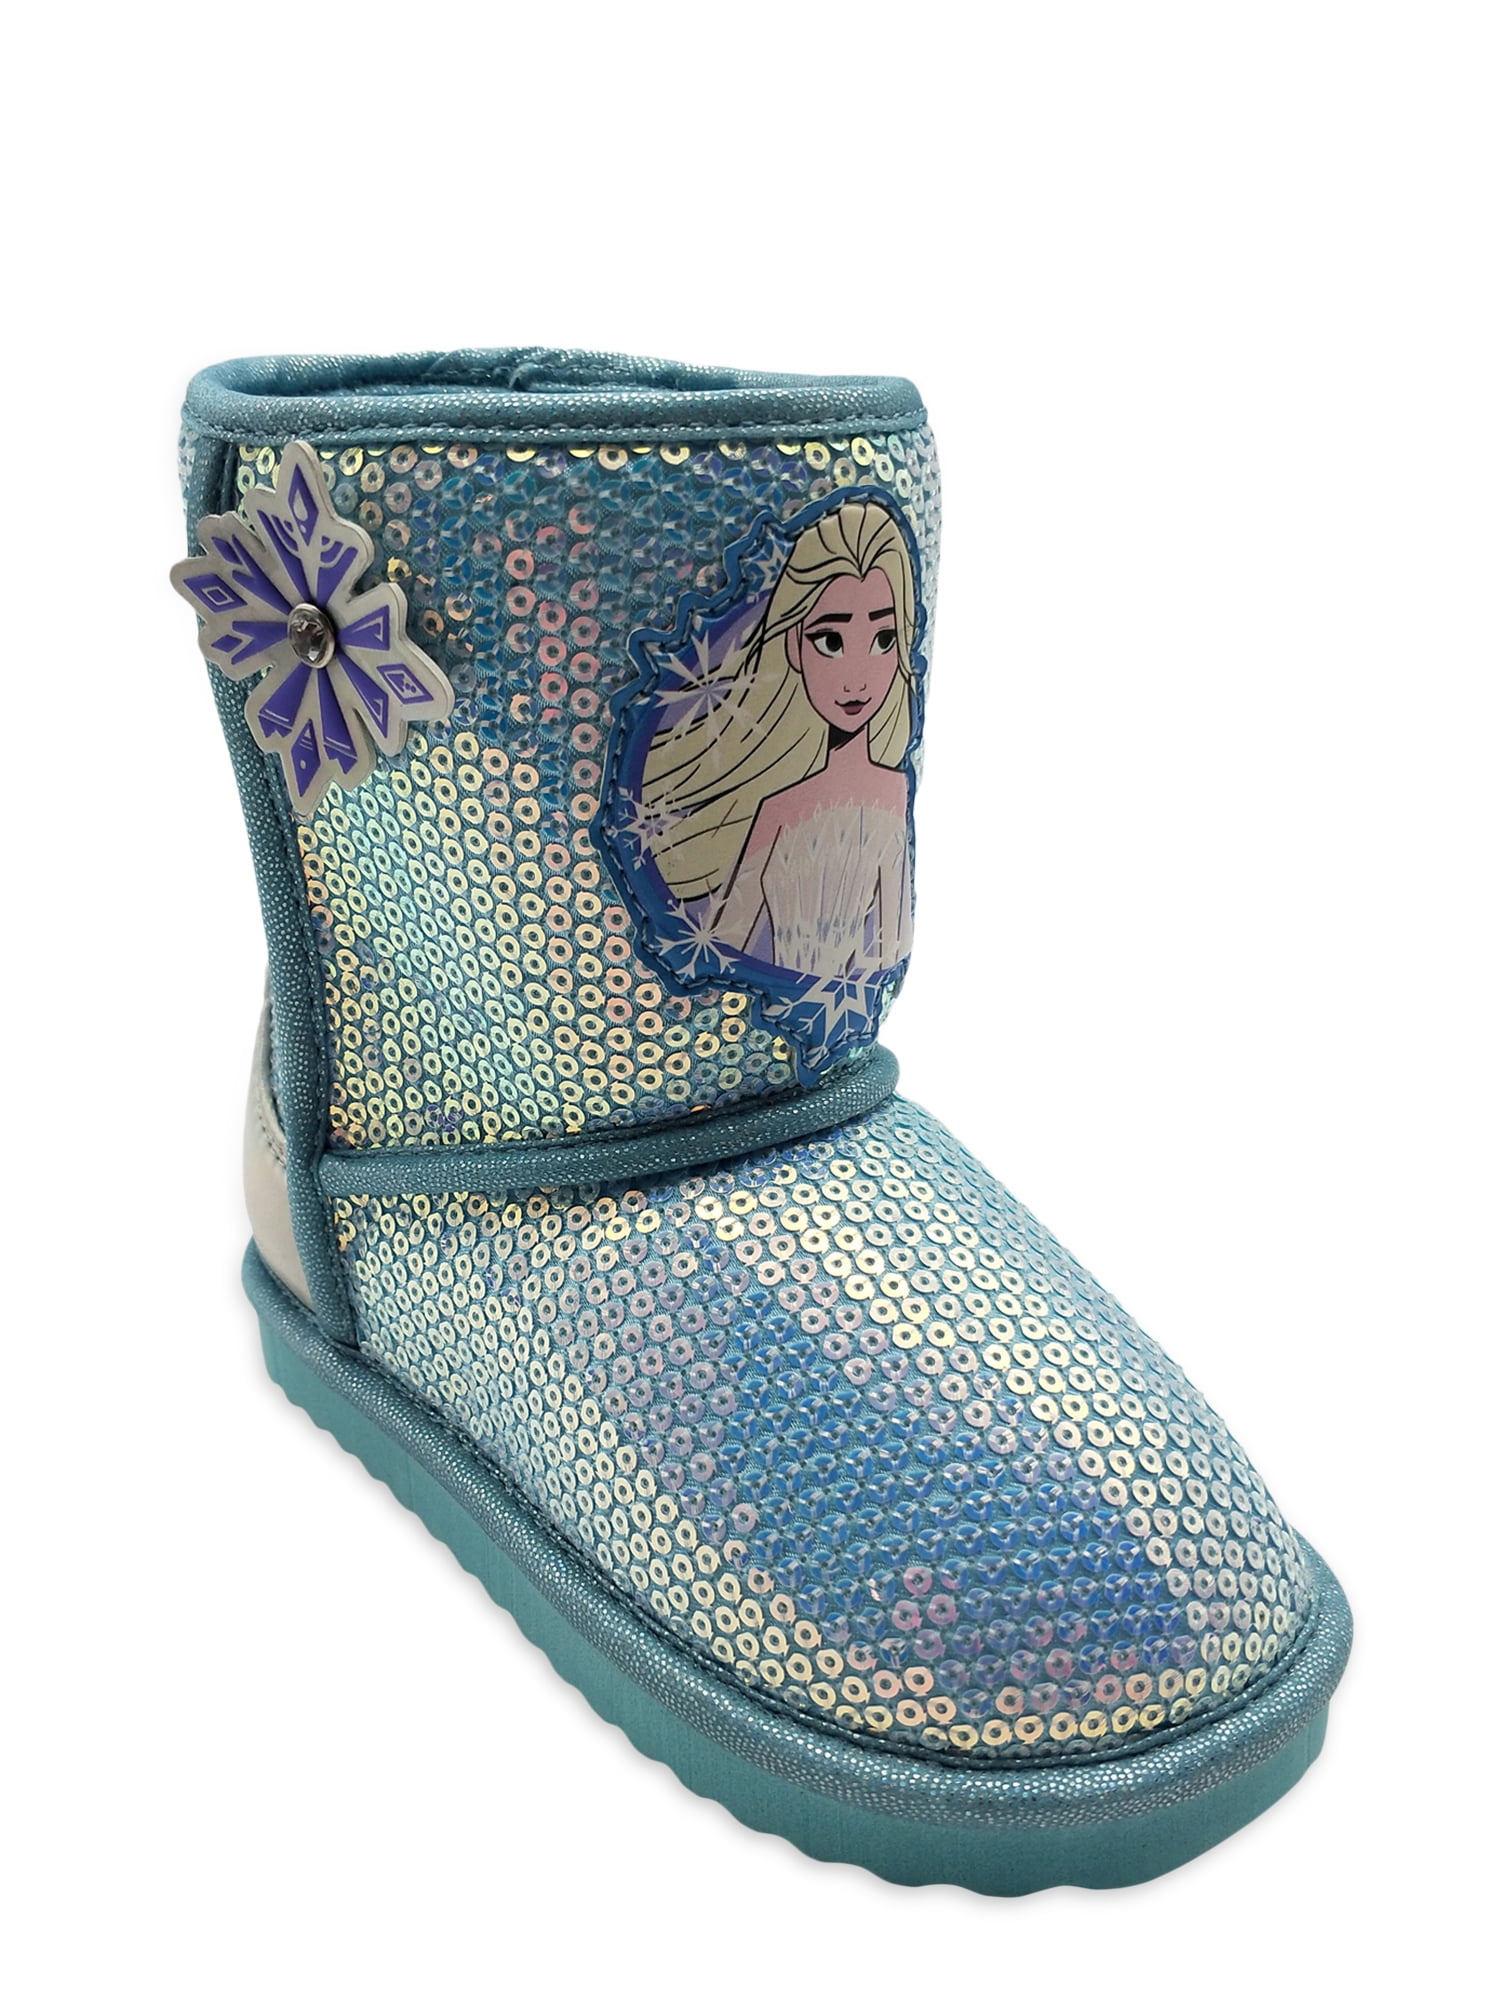 LOL Surprise pink & blue glitter bottom boots 